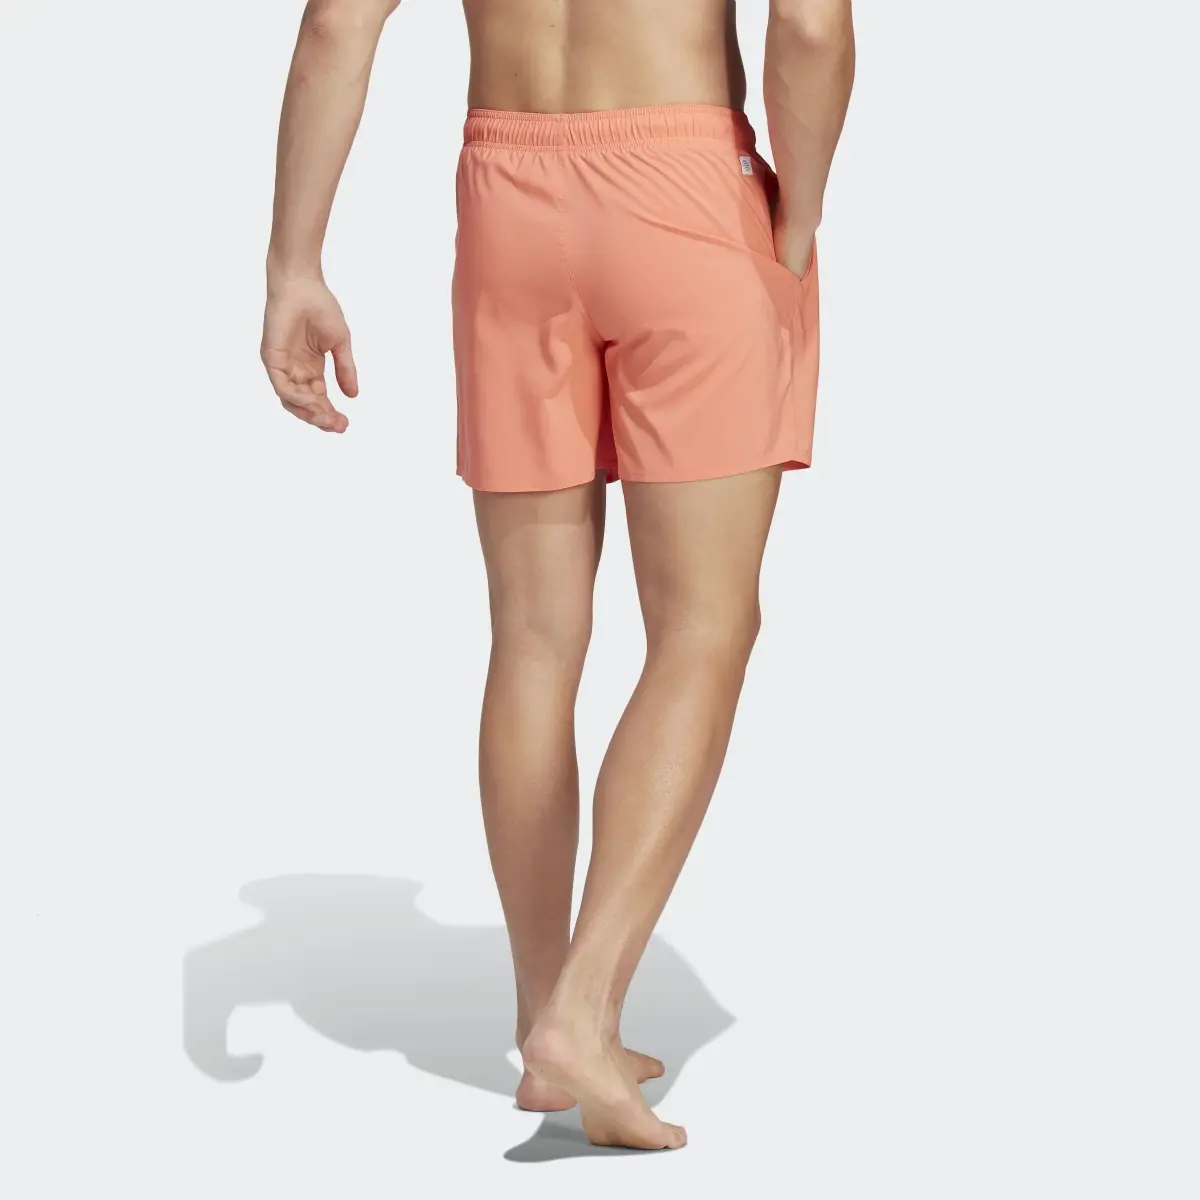 Adidas Short Length Solid Swim Shorts. 2